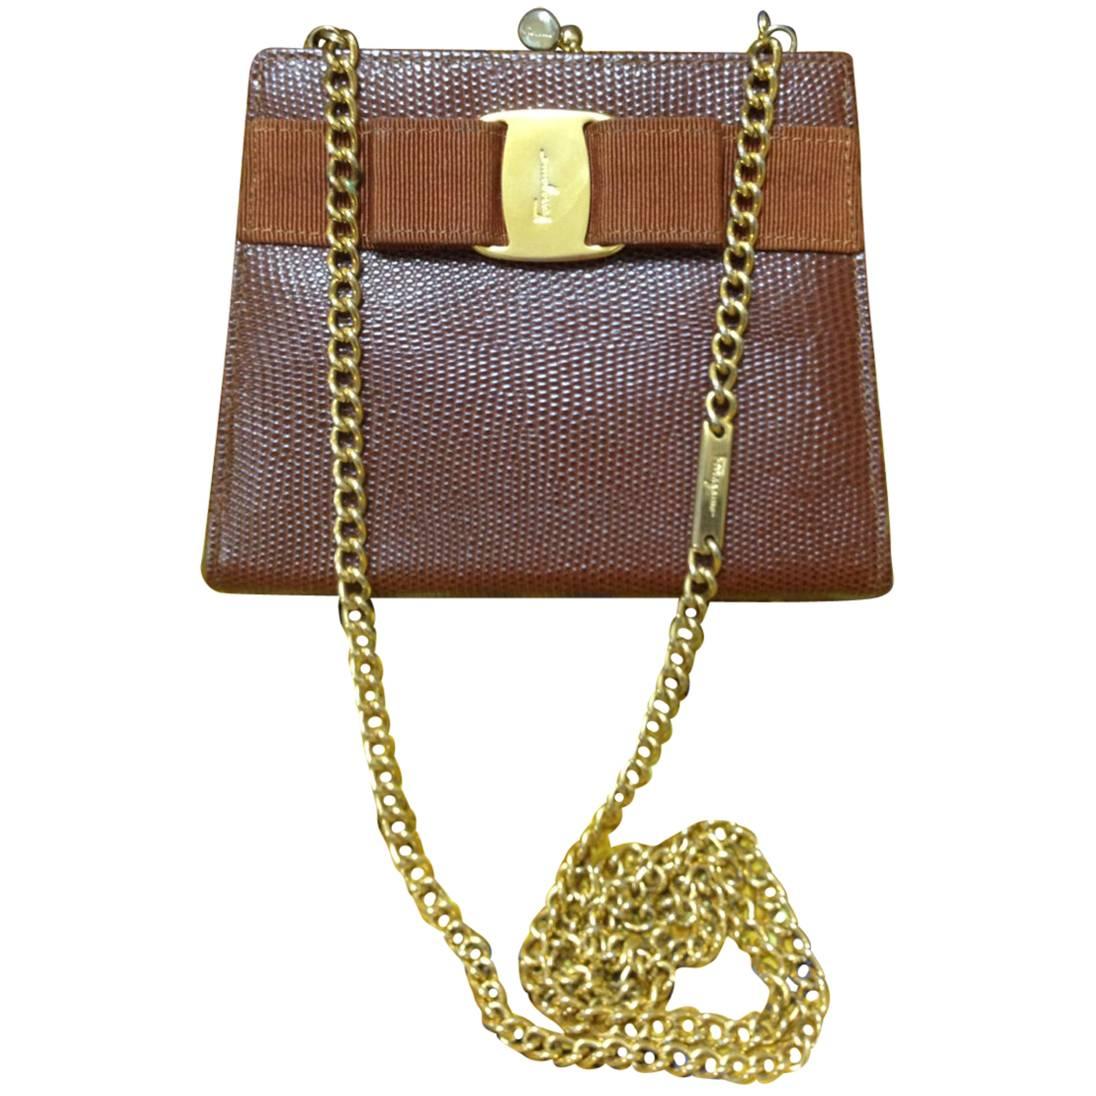 Vintage Salvatore Ferragamo brown lizard embossed leather golden chain clutch. For Sale